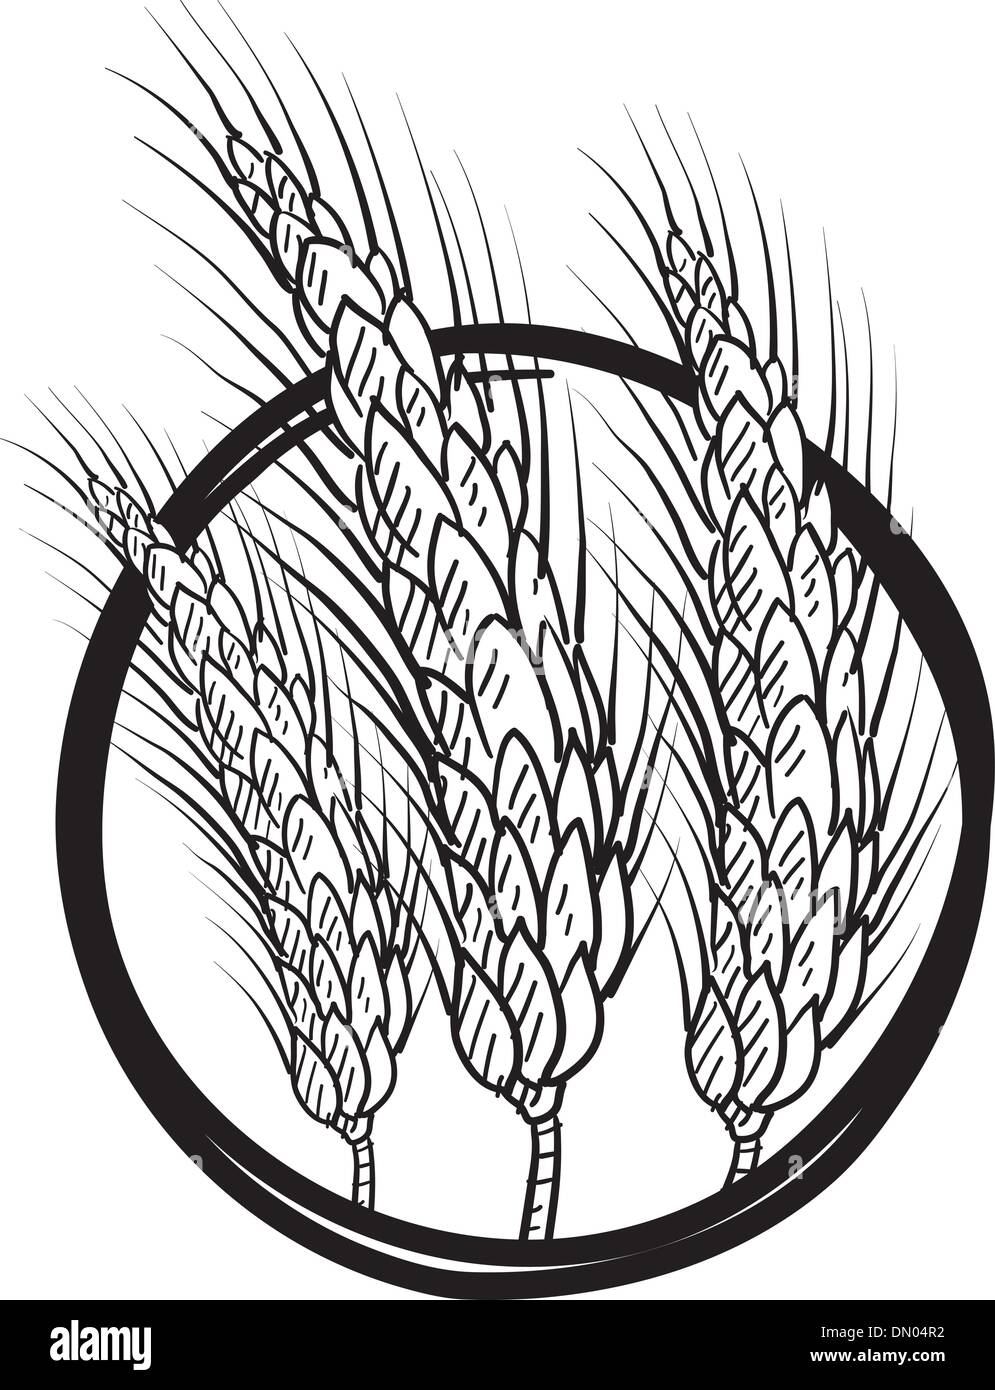 Wheat or grain emblem vector sketch Stock Vector